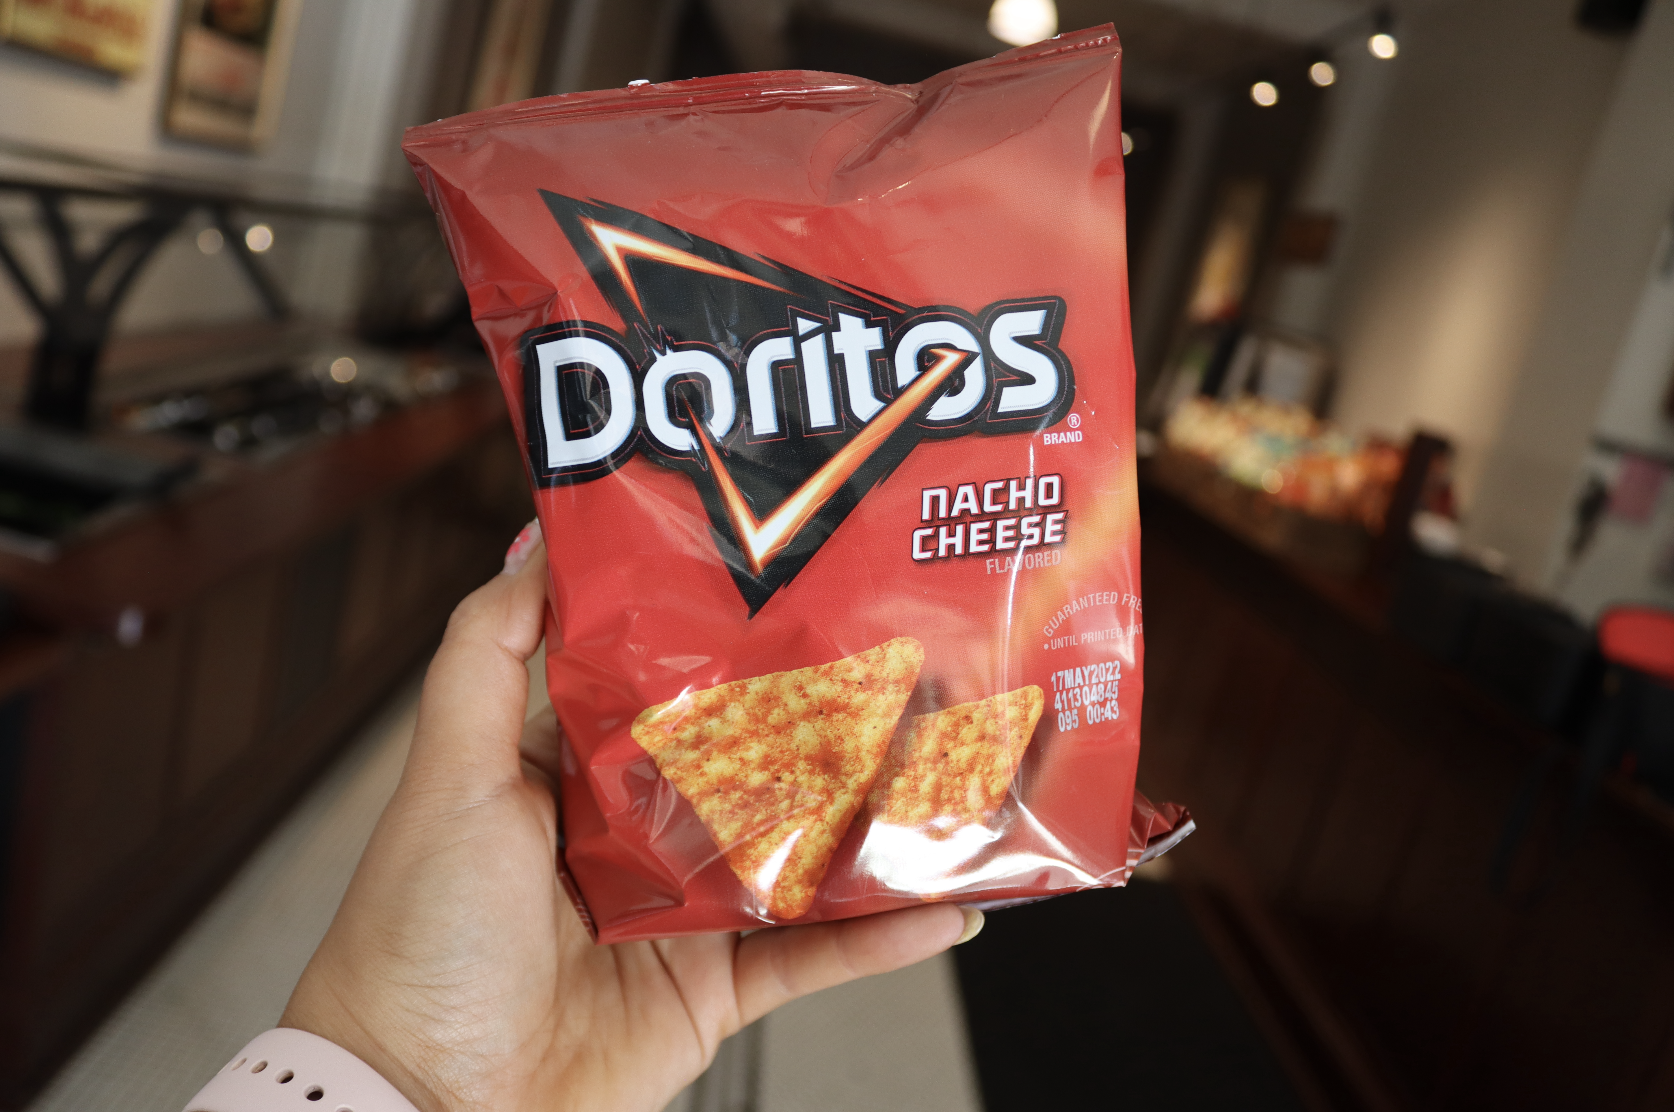 Chips - Doritos